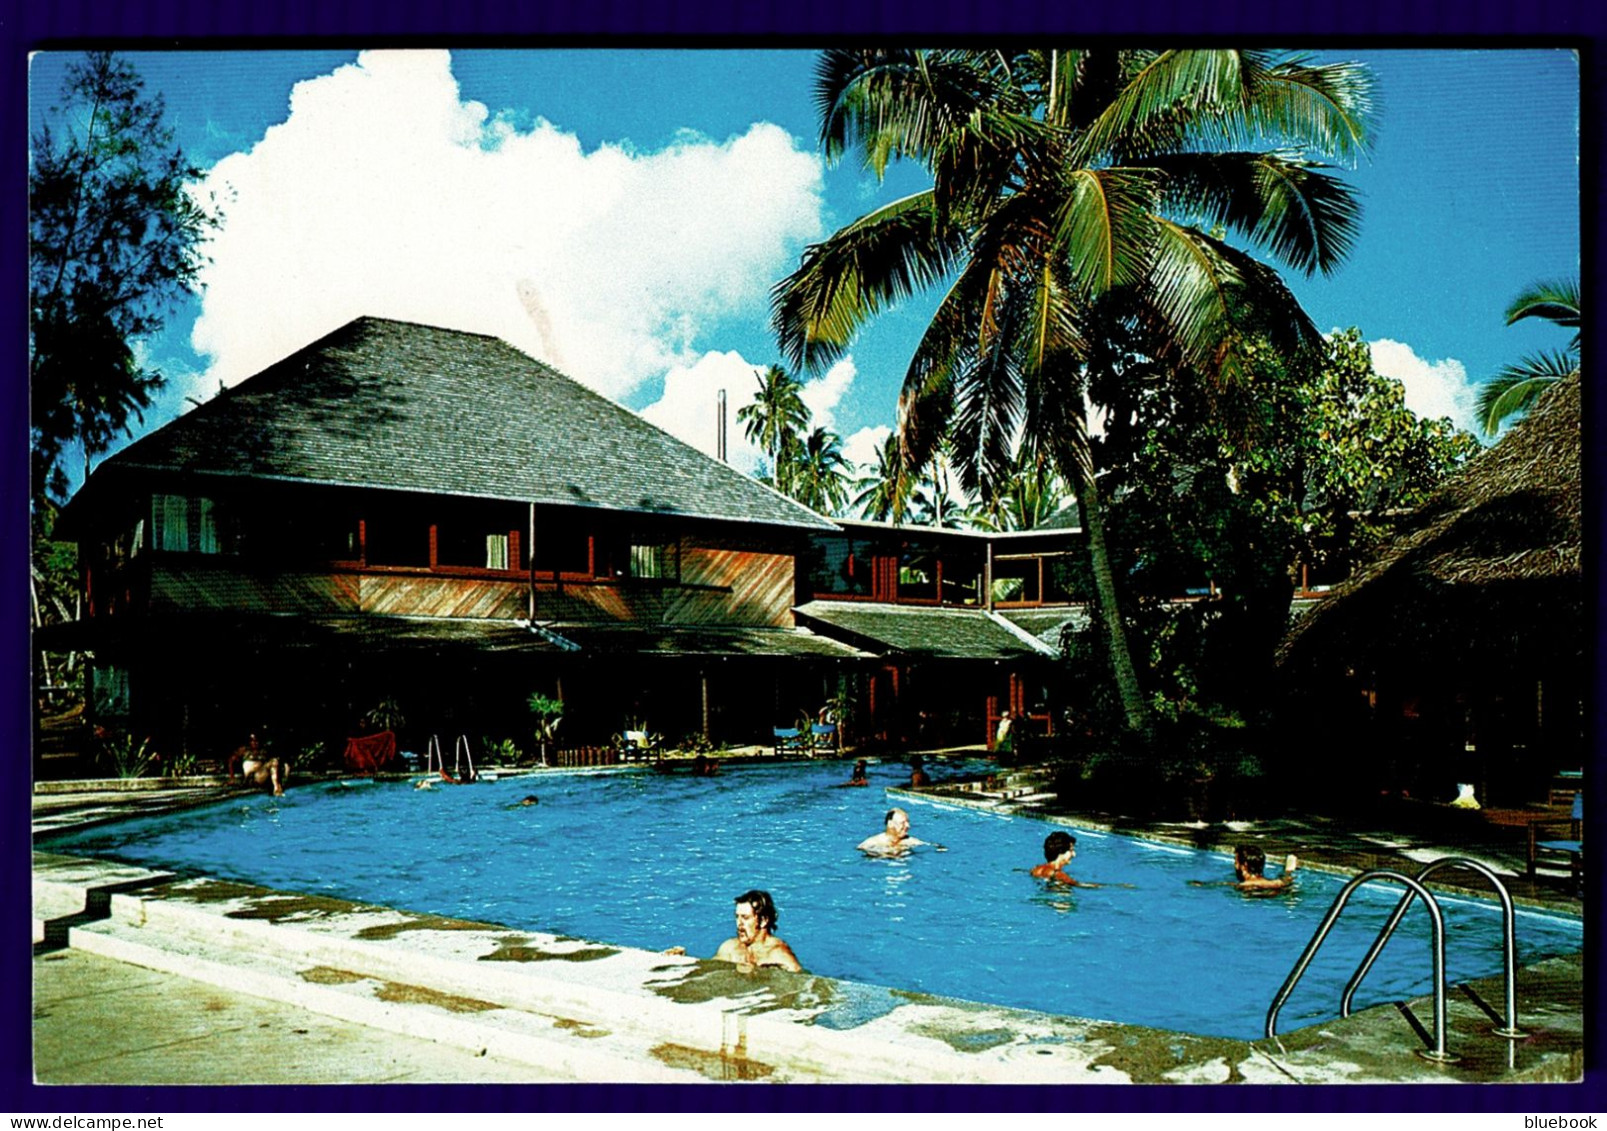 Ref 1647 - Cook Islands Postcard - Rarotongan Hotel Swimming Pool - Pacific Island - Cook-Inseln